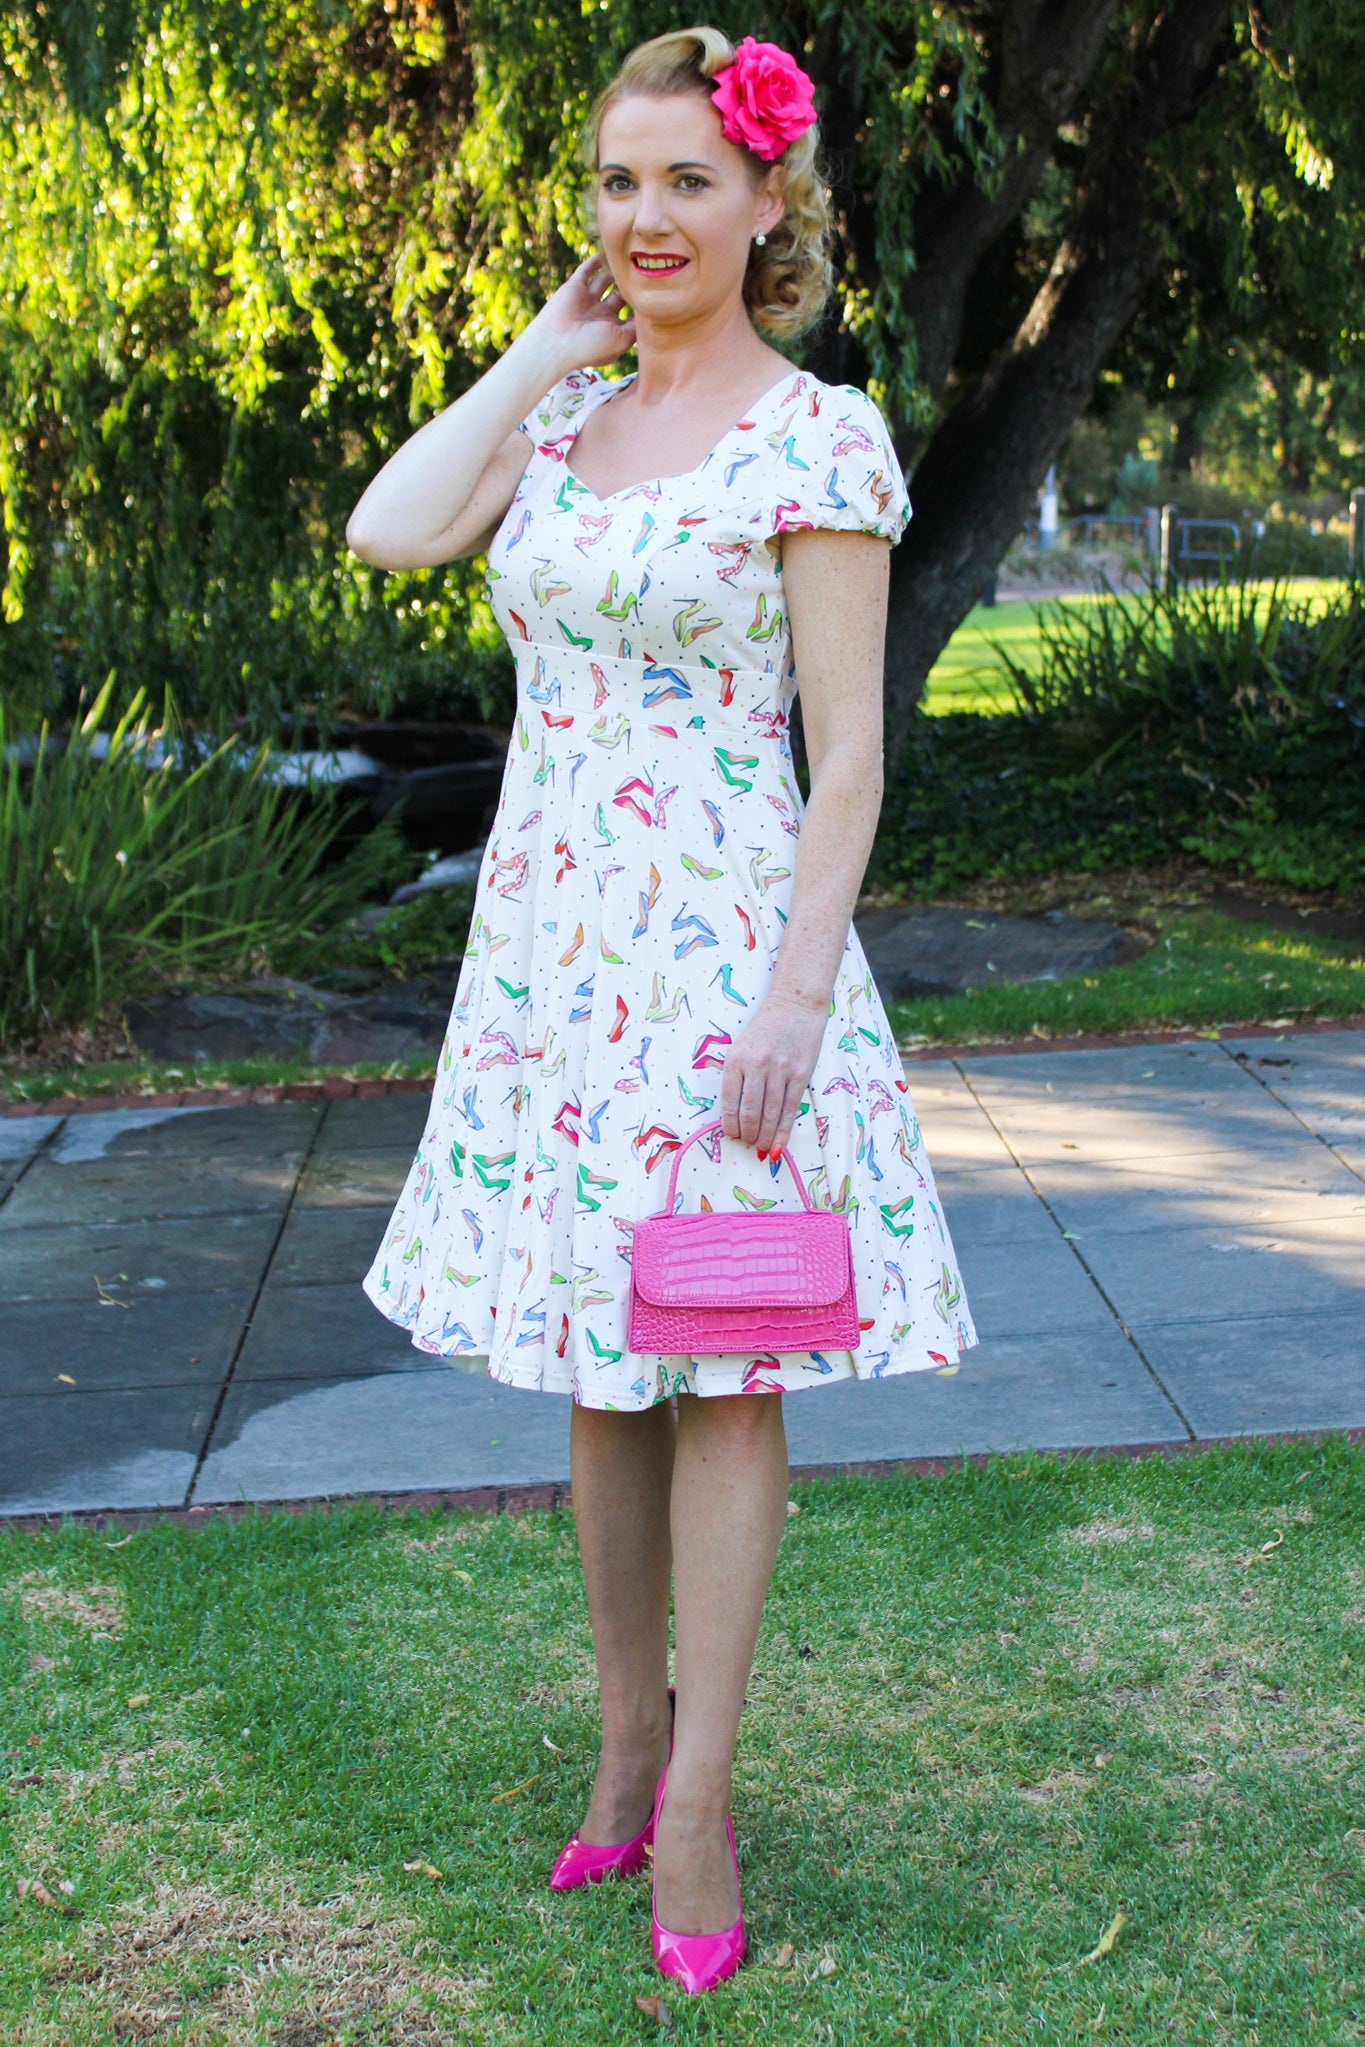 Cream Cap Sleeve Dress in Stiletto Print